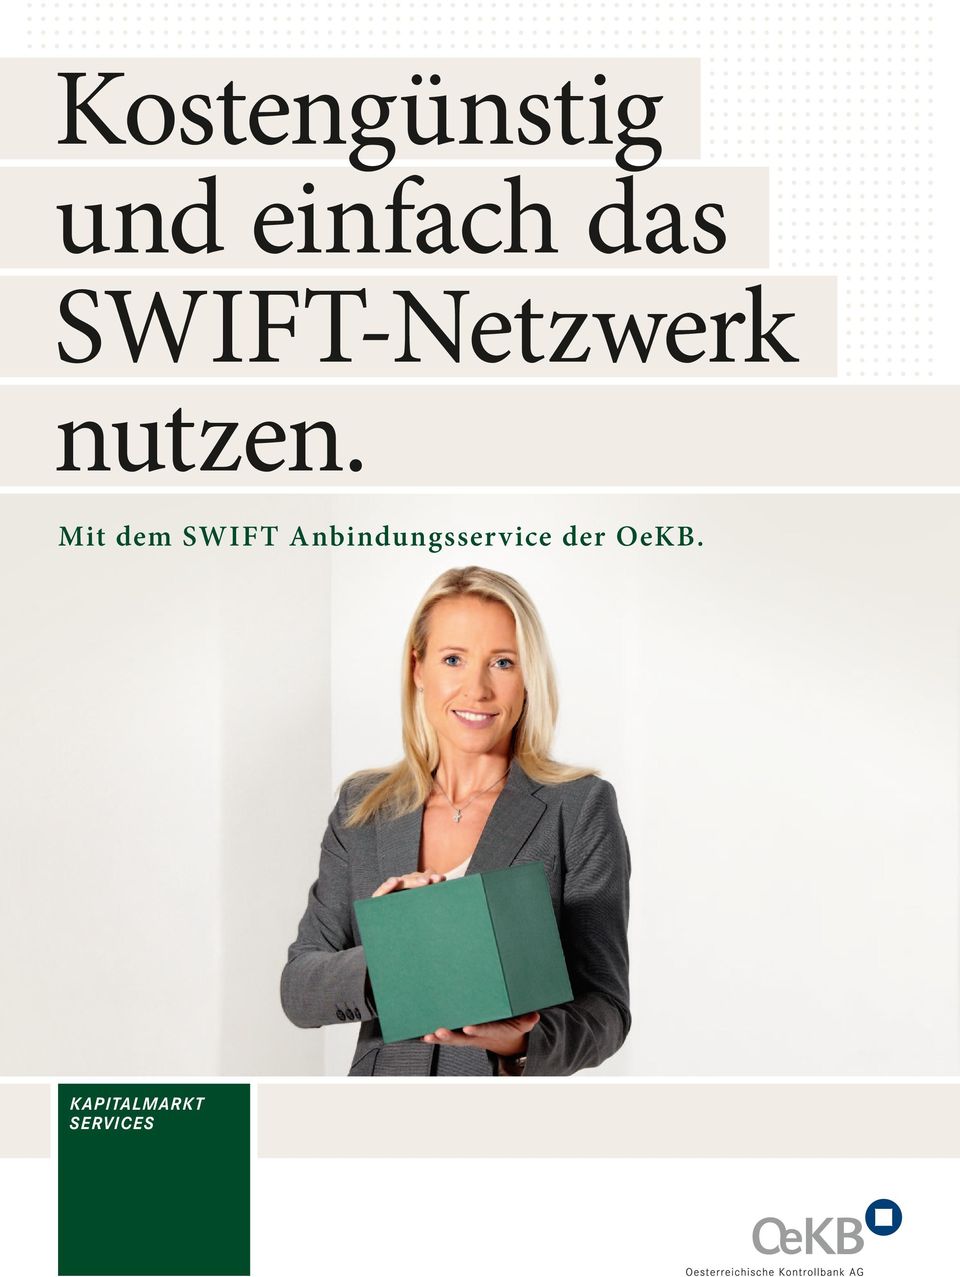 SWIFT-Ntzwrk utz.